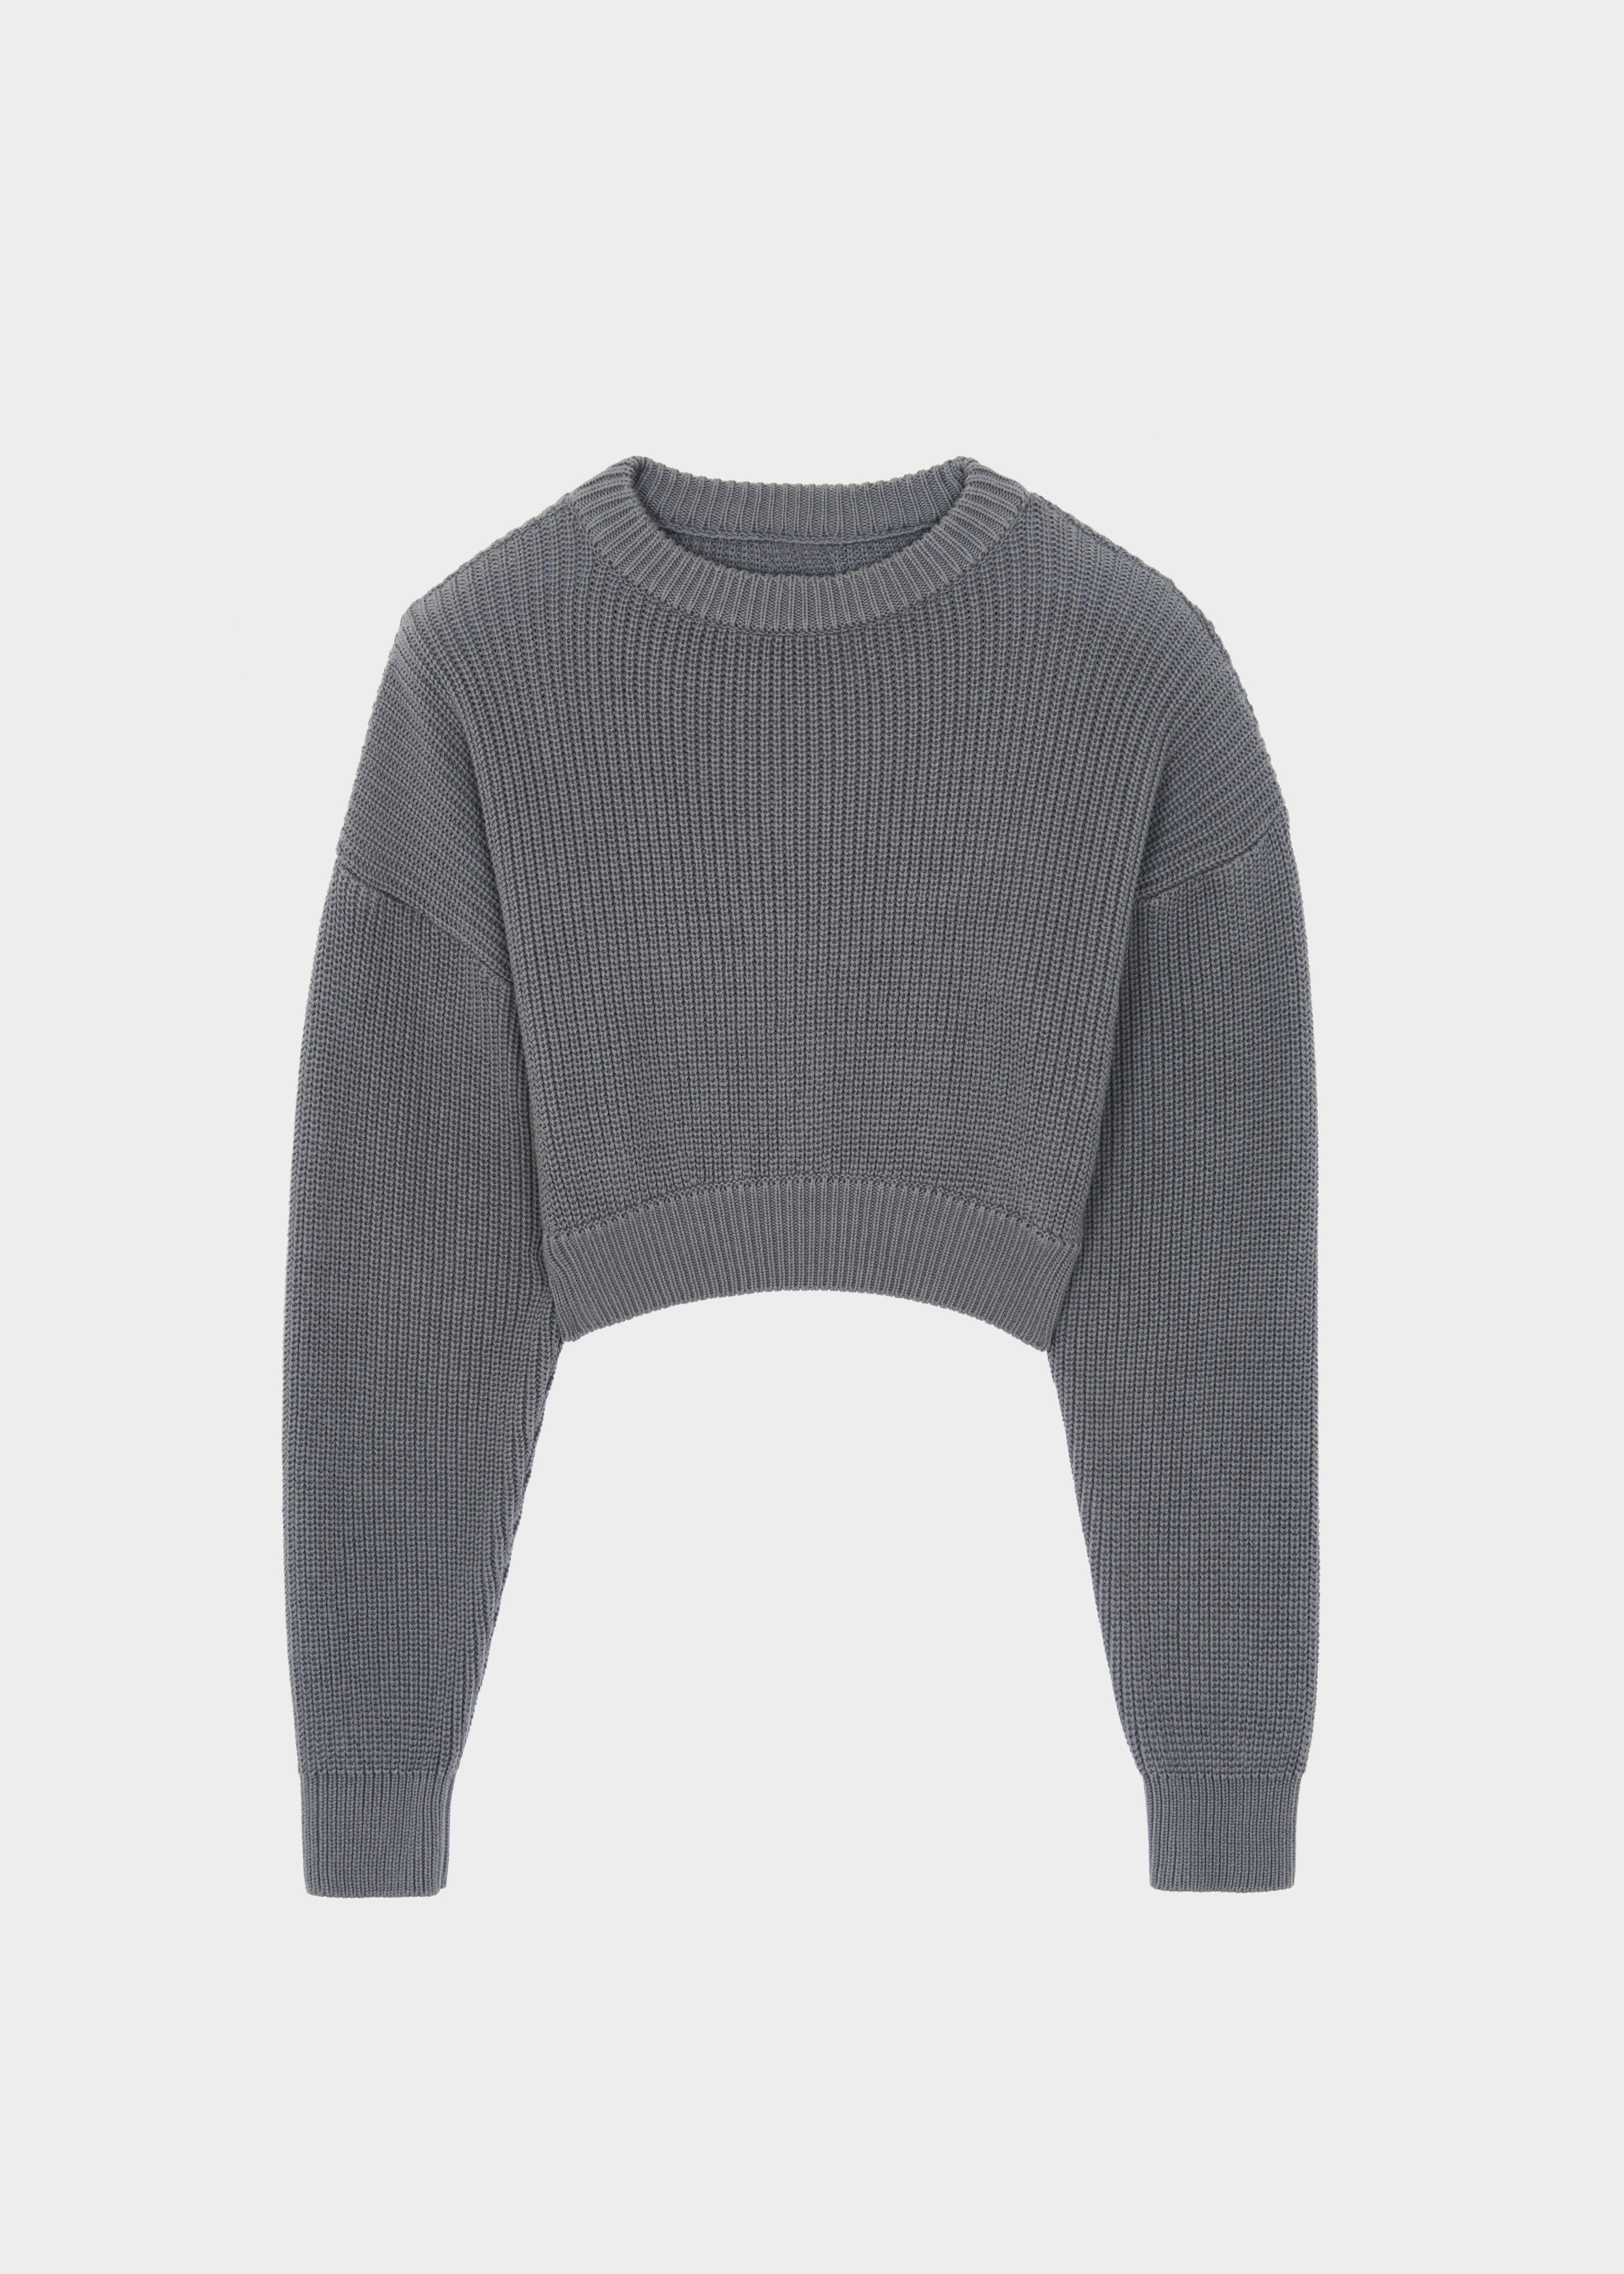 Teague Cropped Sweater - Khaki - 7